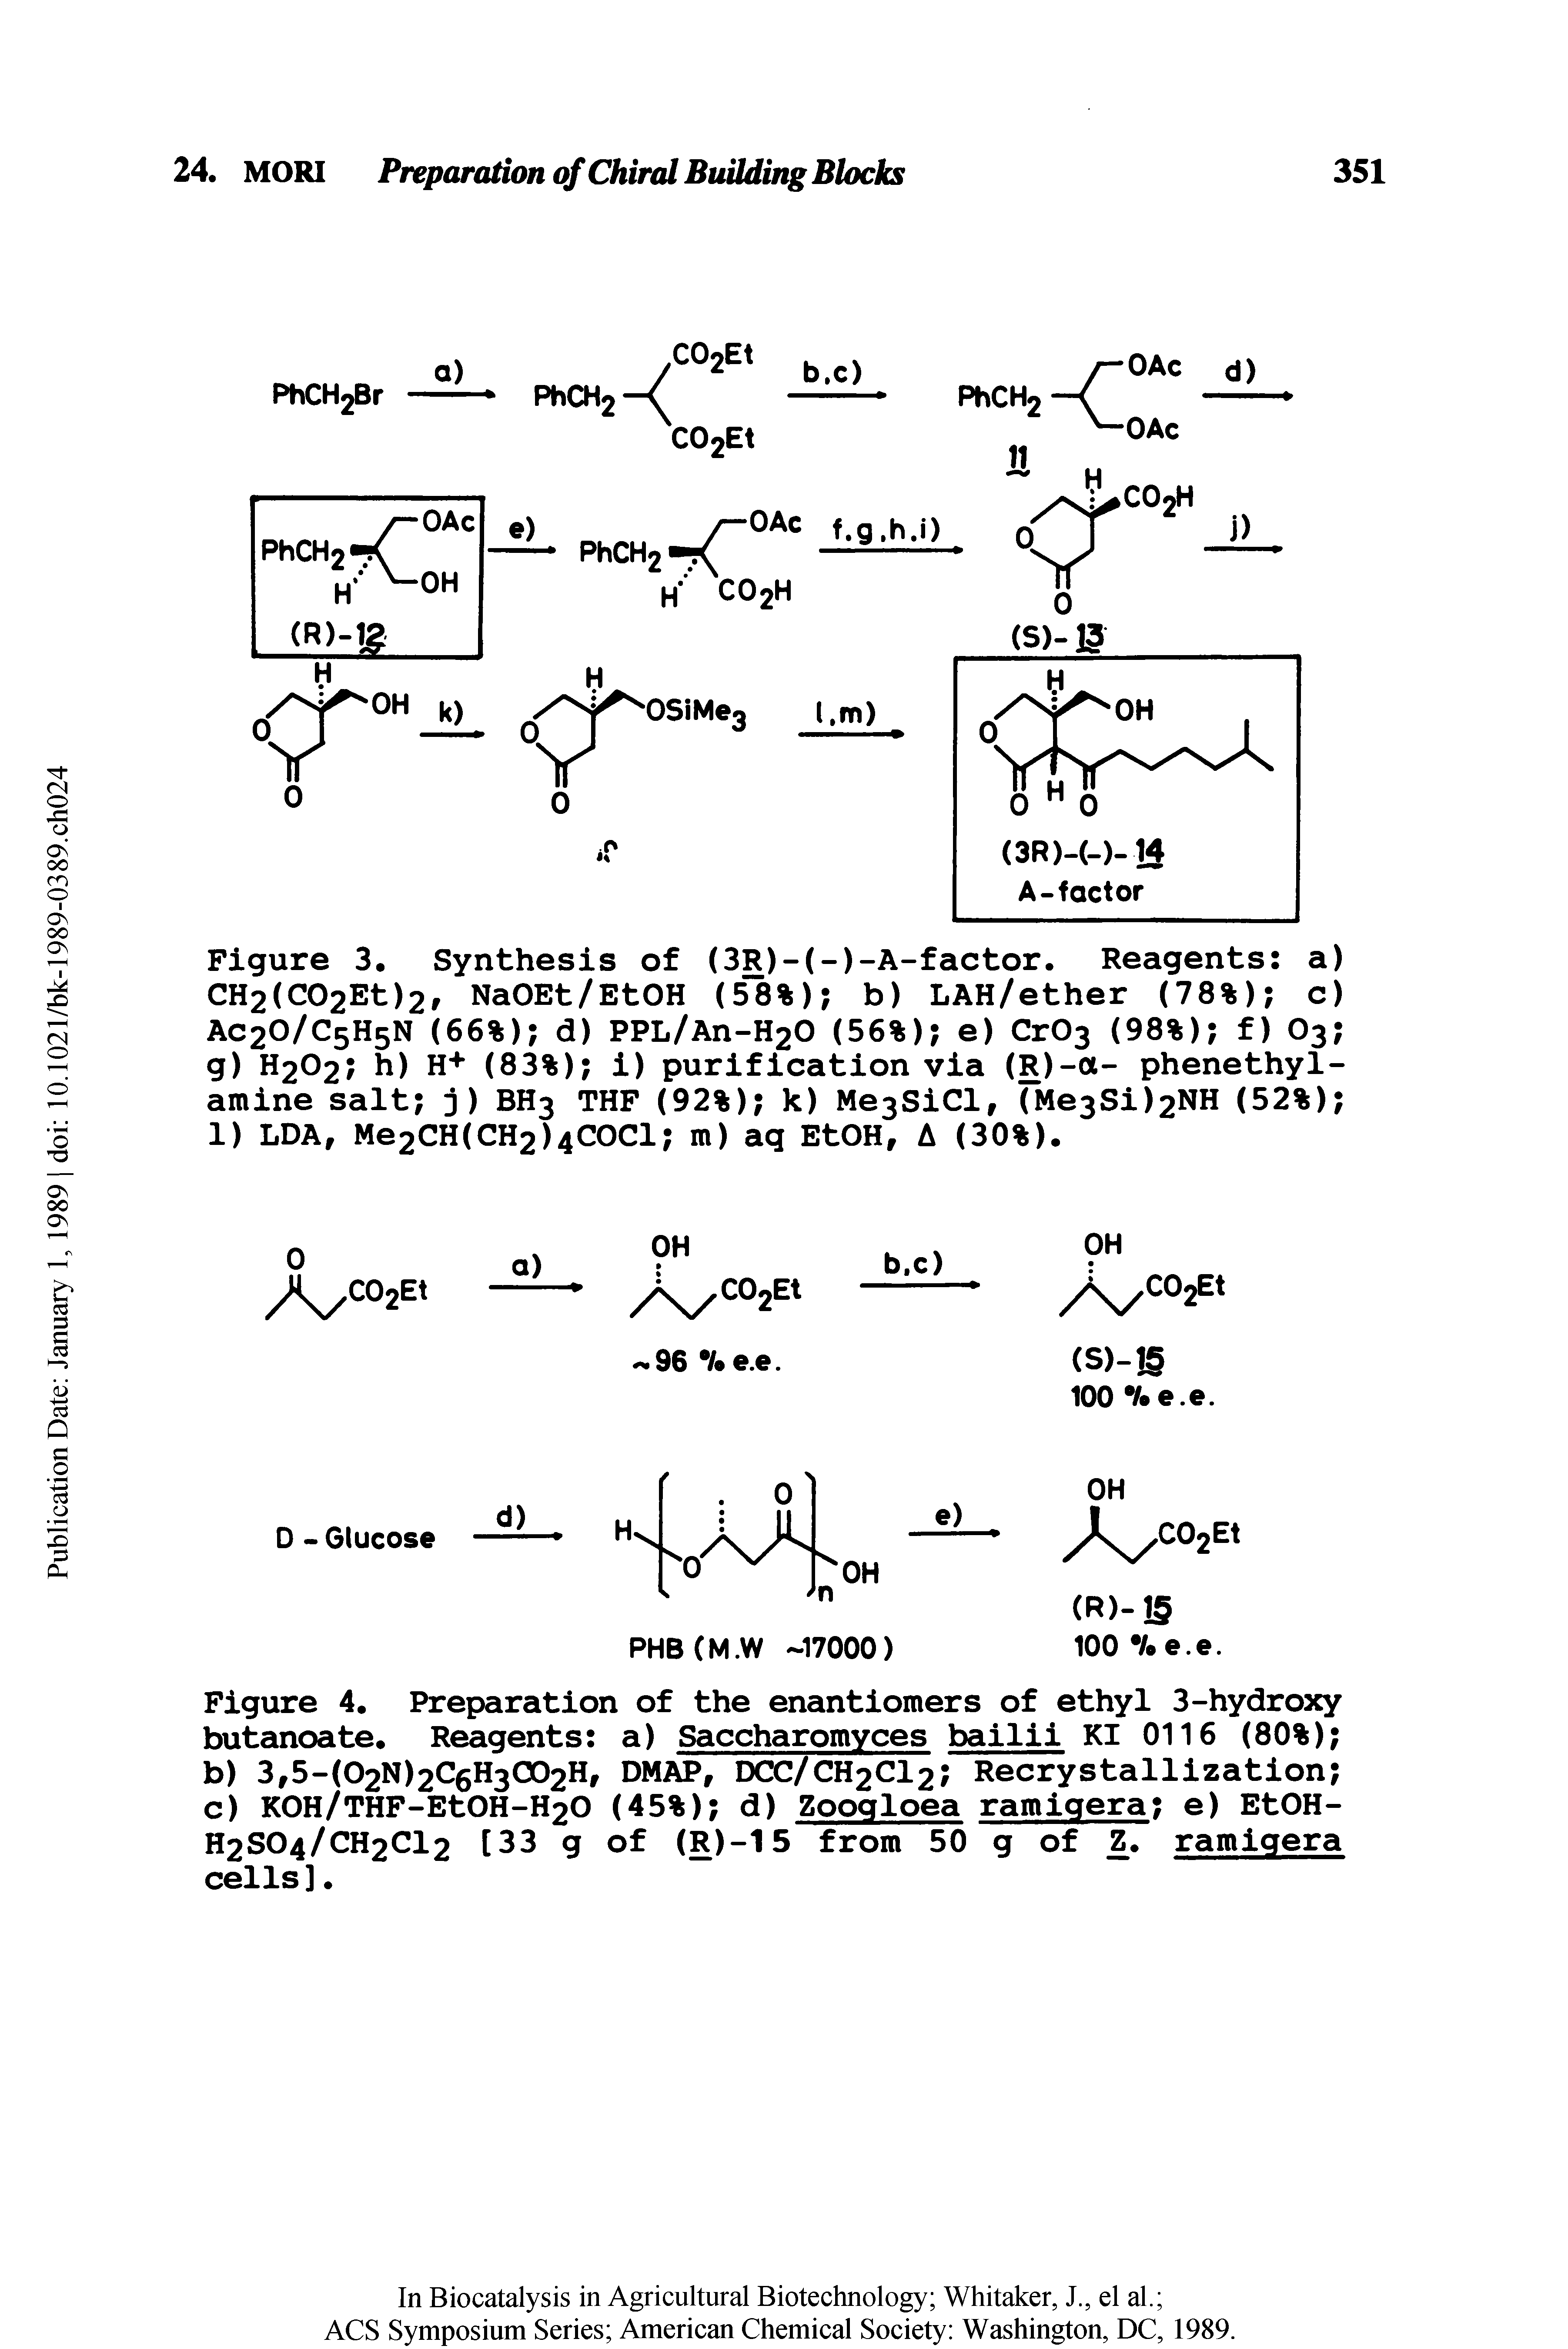 Figure 4. Preparation of the enantiomers of ethyl 3-hydroxy butanoate. Reagents a) Saccharomyces bailii KI 0116 (80%) ...